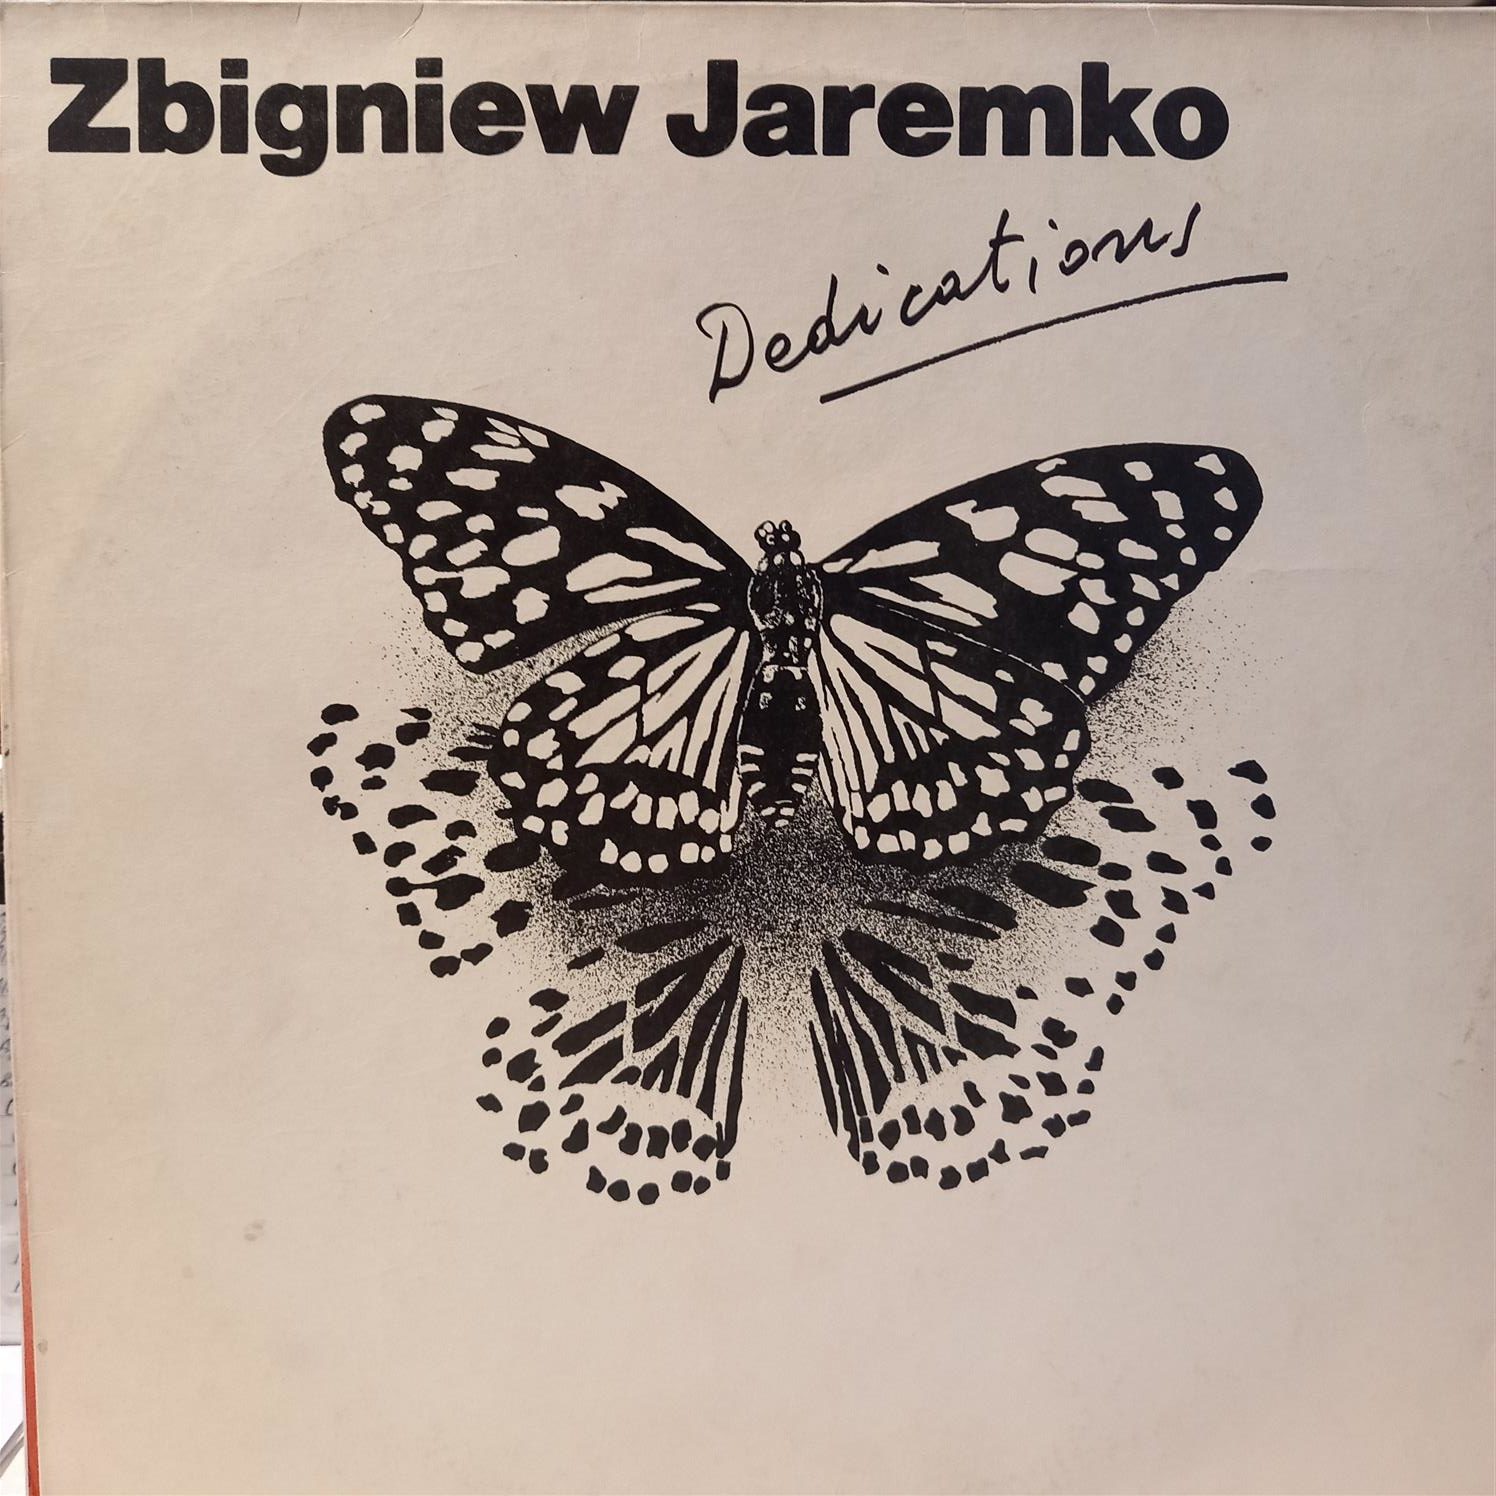 ZBIGNIEW JAREMKO – DEDICATIONS ON